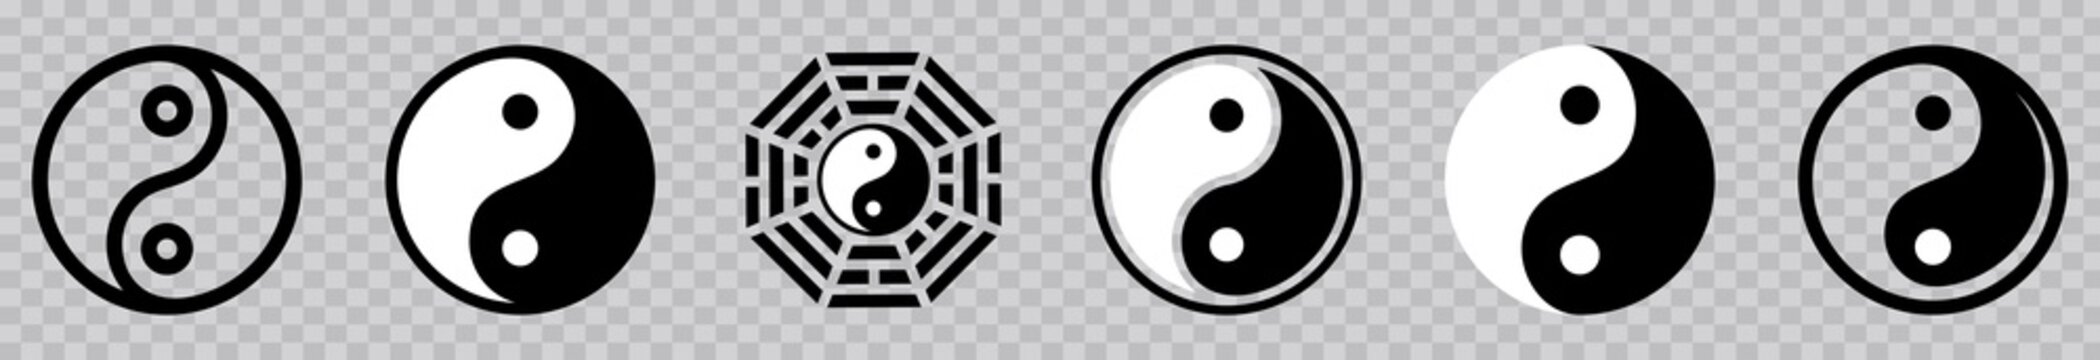 Yin Yang icon set, Yin and Yang symbol isolated on transparent background. vector illustration